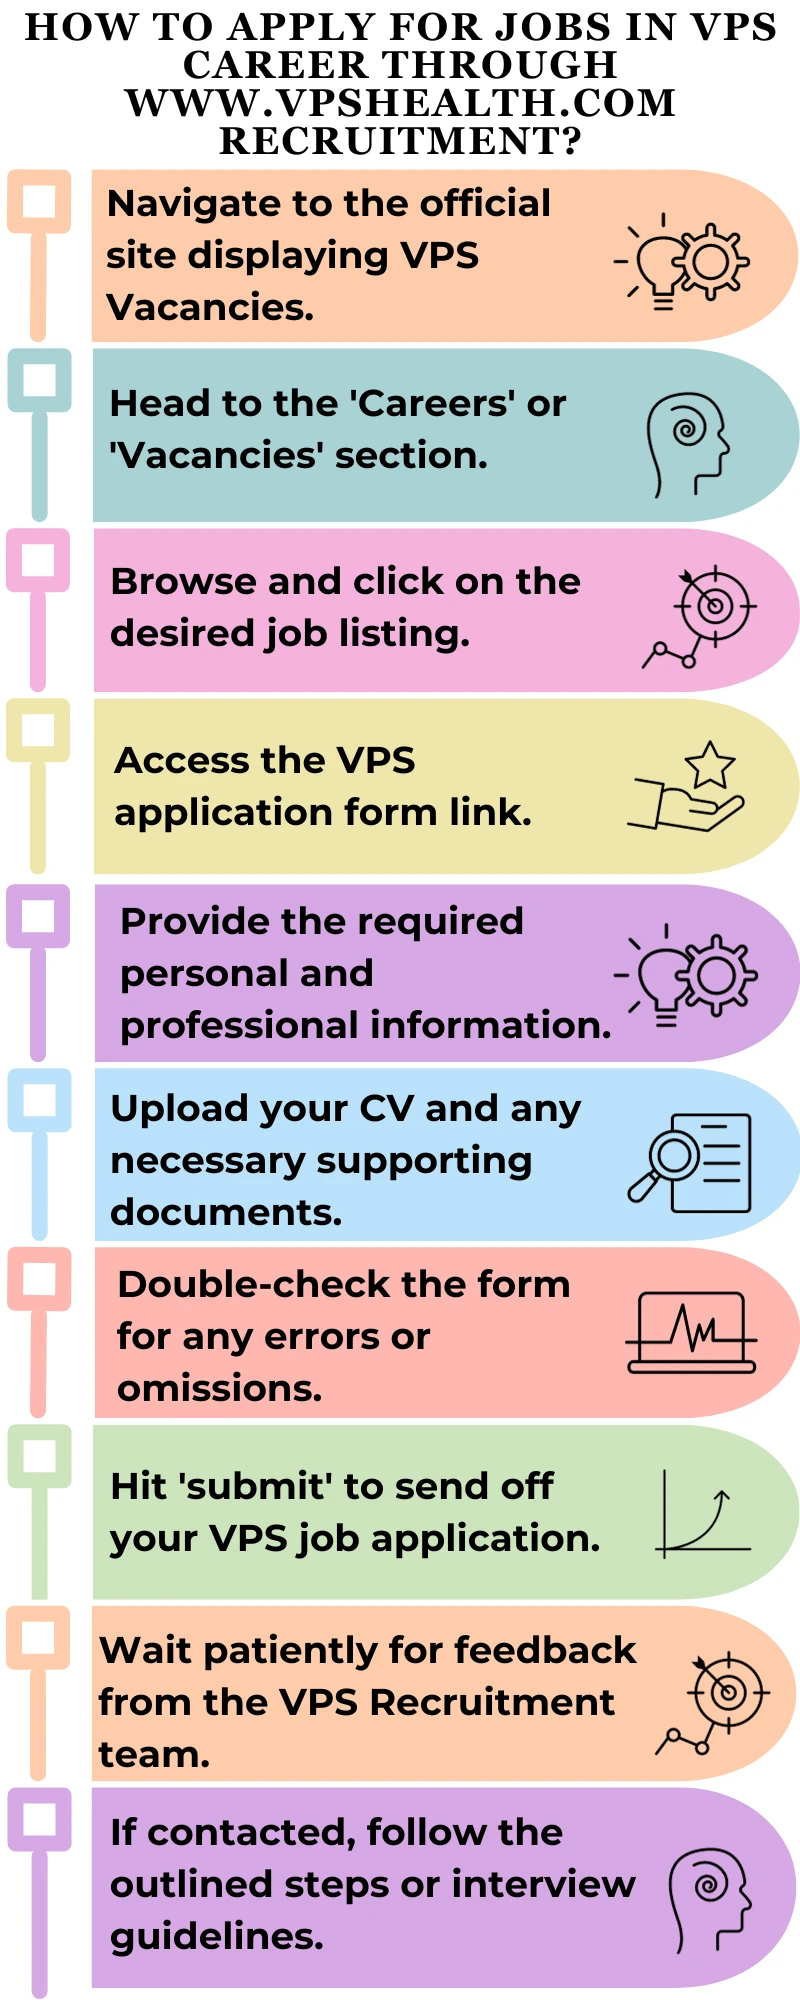 How to Apply for Jobs in VPS Career through www.vpshealth.com recruitment?